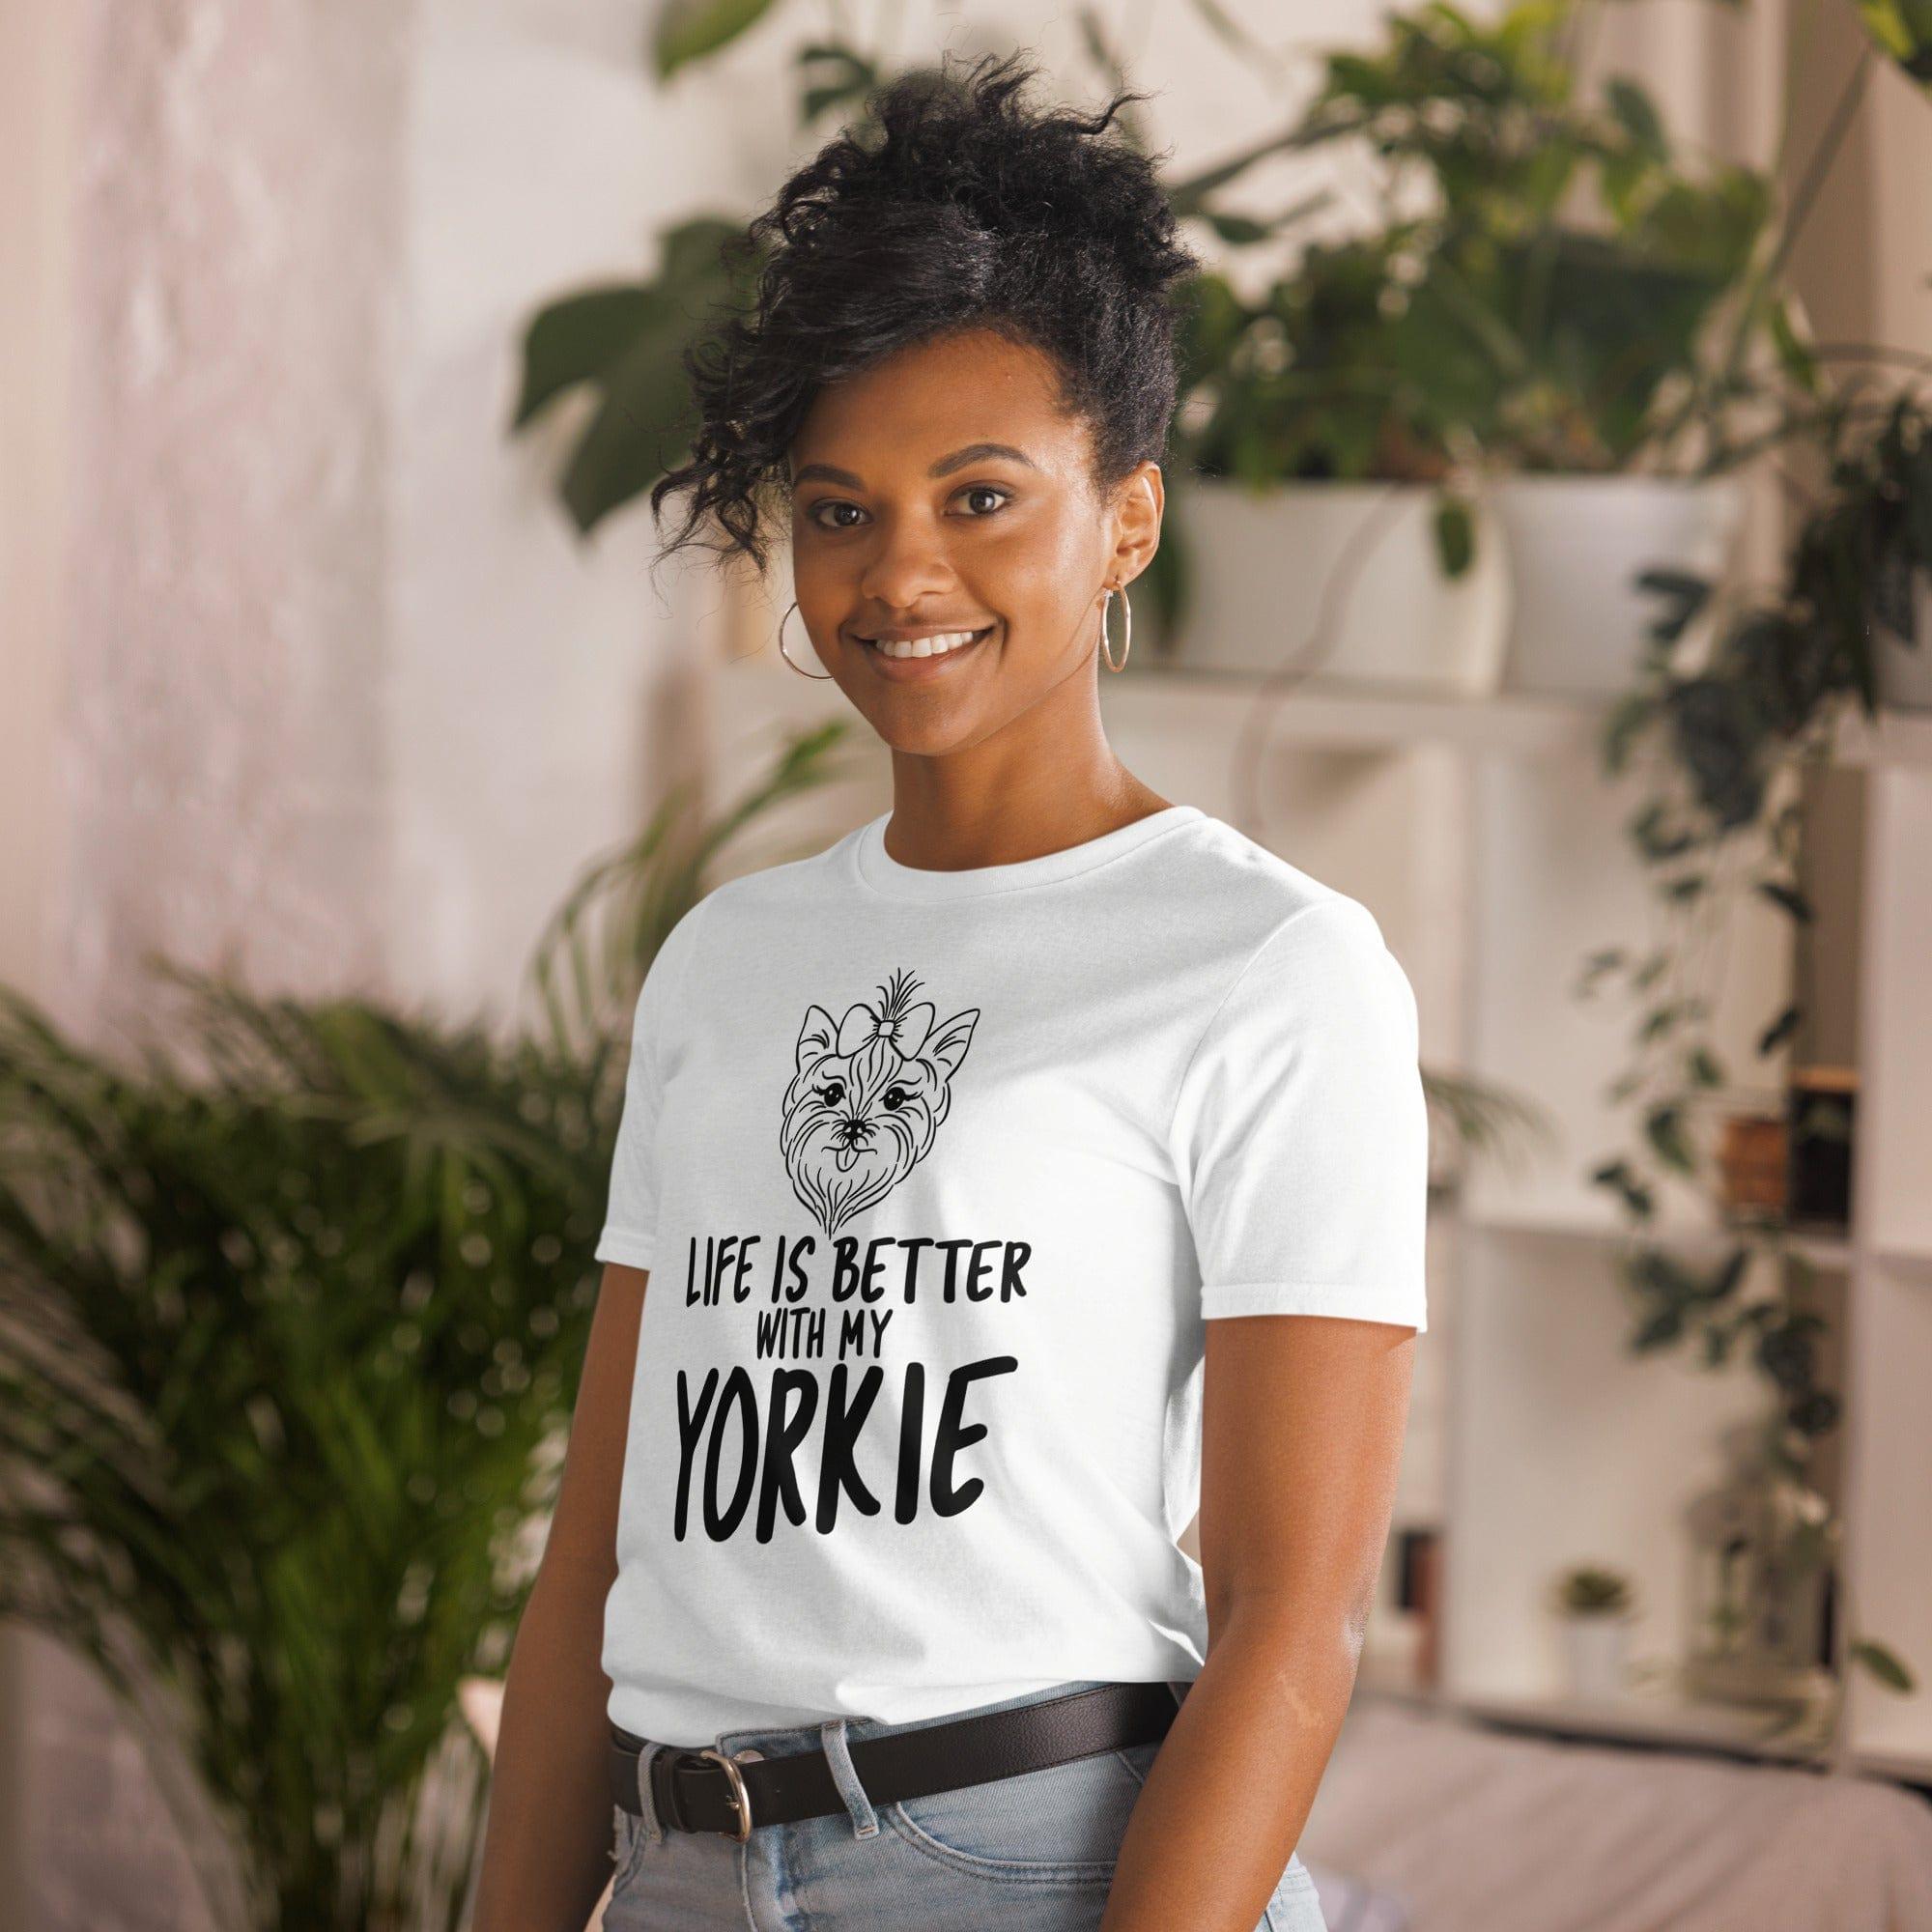 Yorkie T-Shirt Life is Better with my Yorkie Short-Sleeve Unisex Top - TopKoalaTee